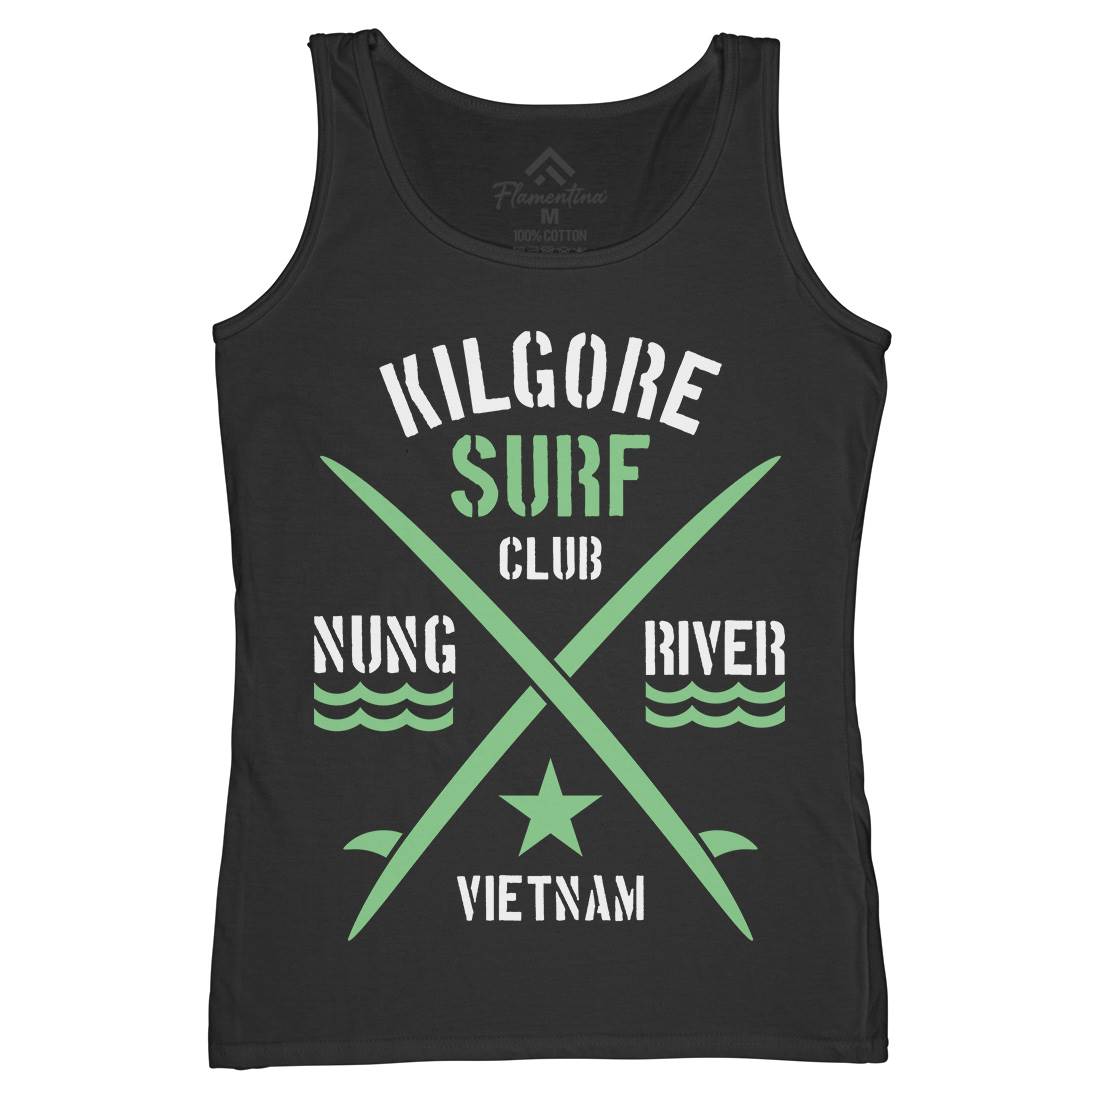 Kilgore Club Womens Organic Tank Top Vest Surf D234